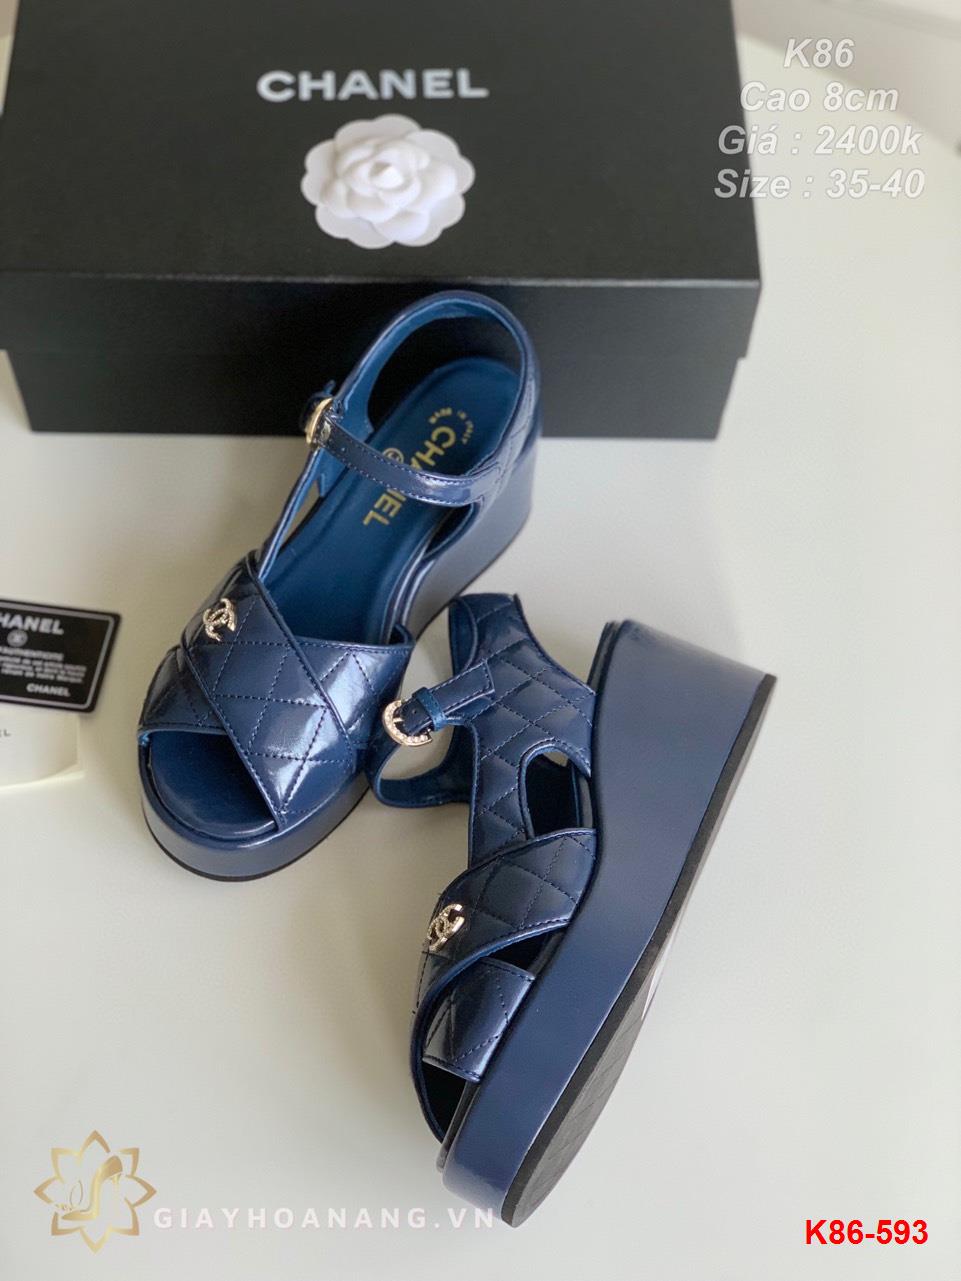 K86-593 Chanel sandal cao 8cm siêu cấp